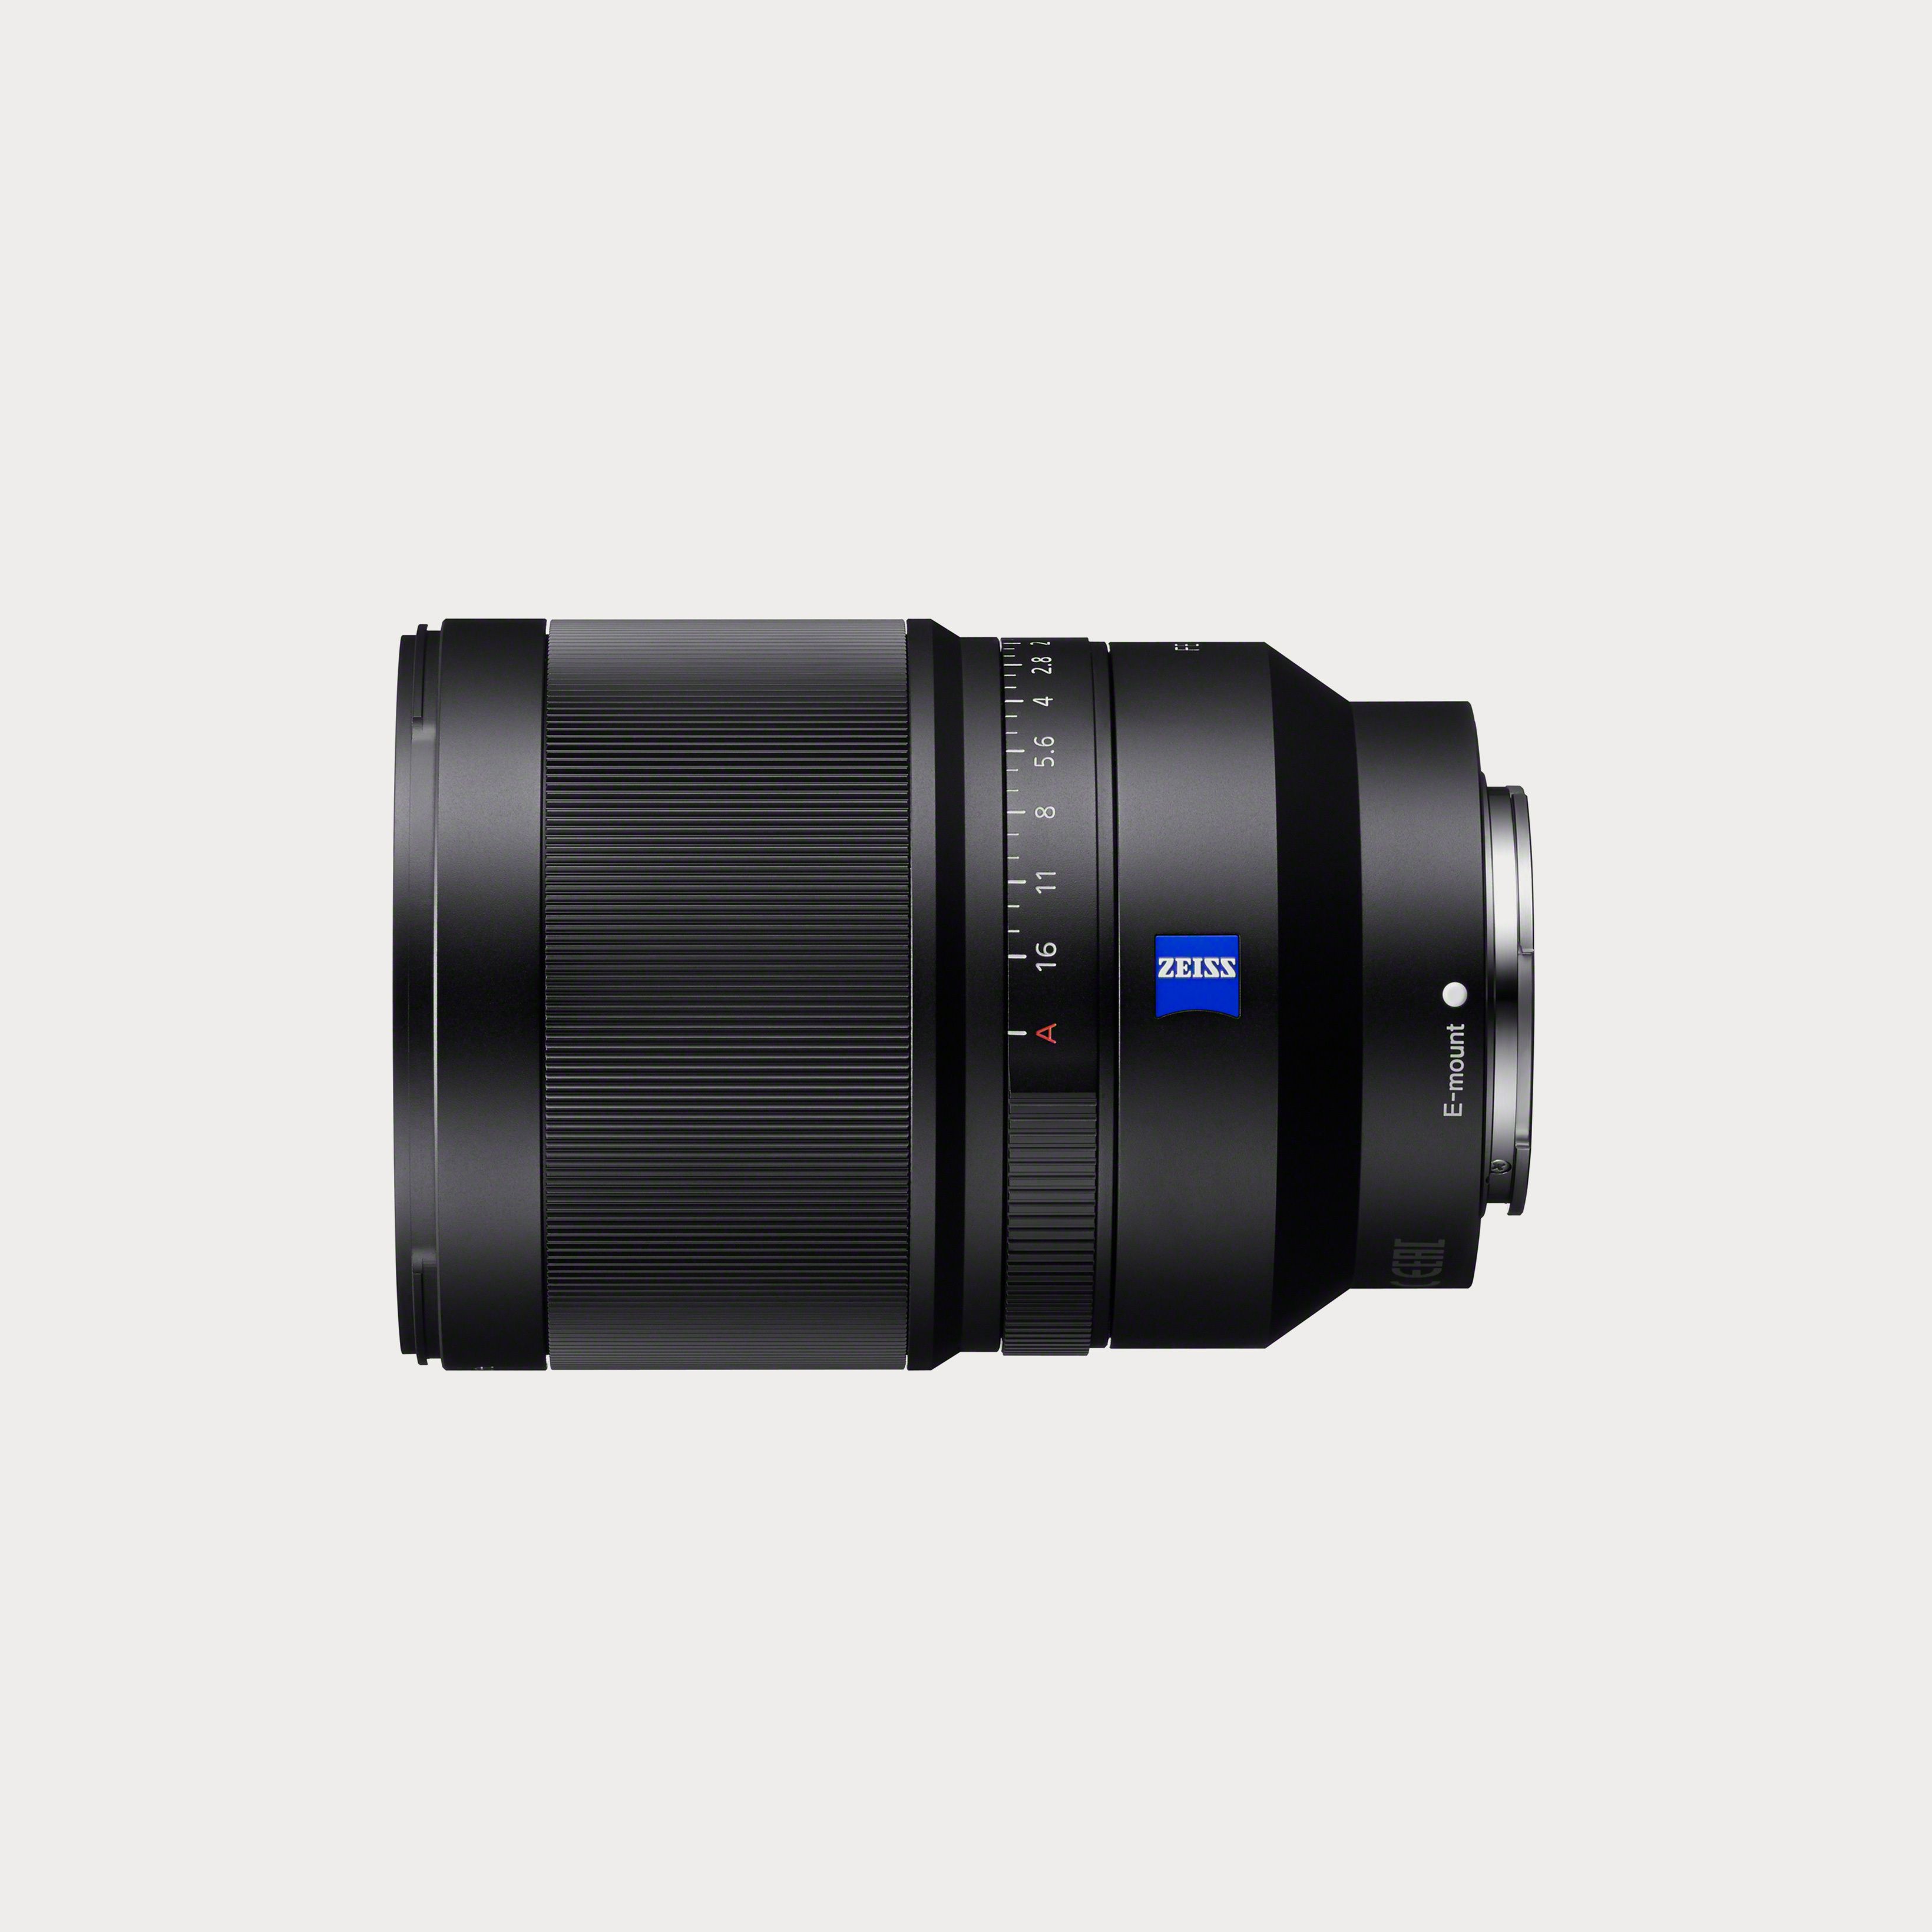 Sony Planar T* FE 50mm f/1.4 ZA Lens | Moment